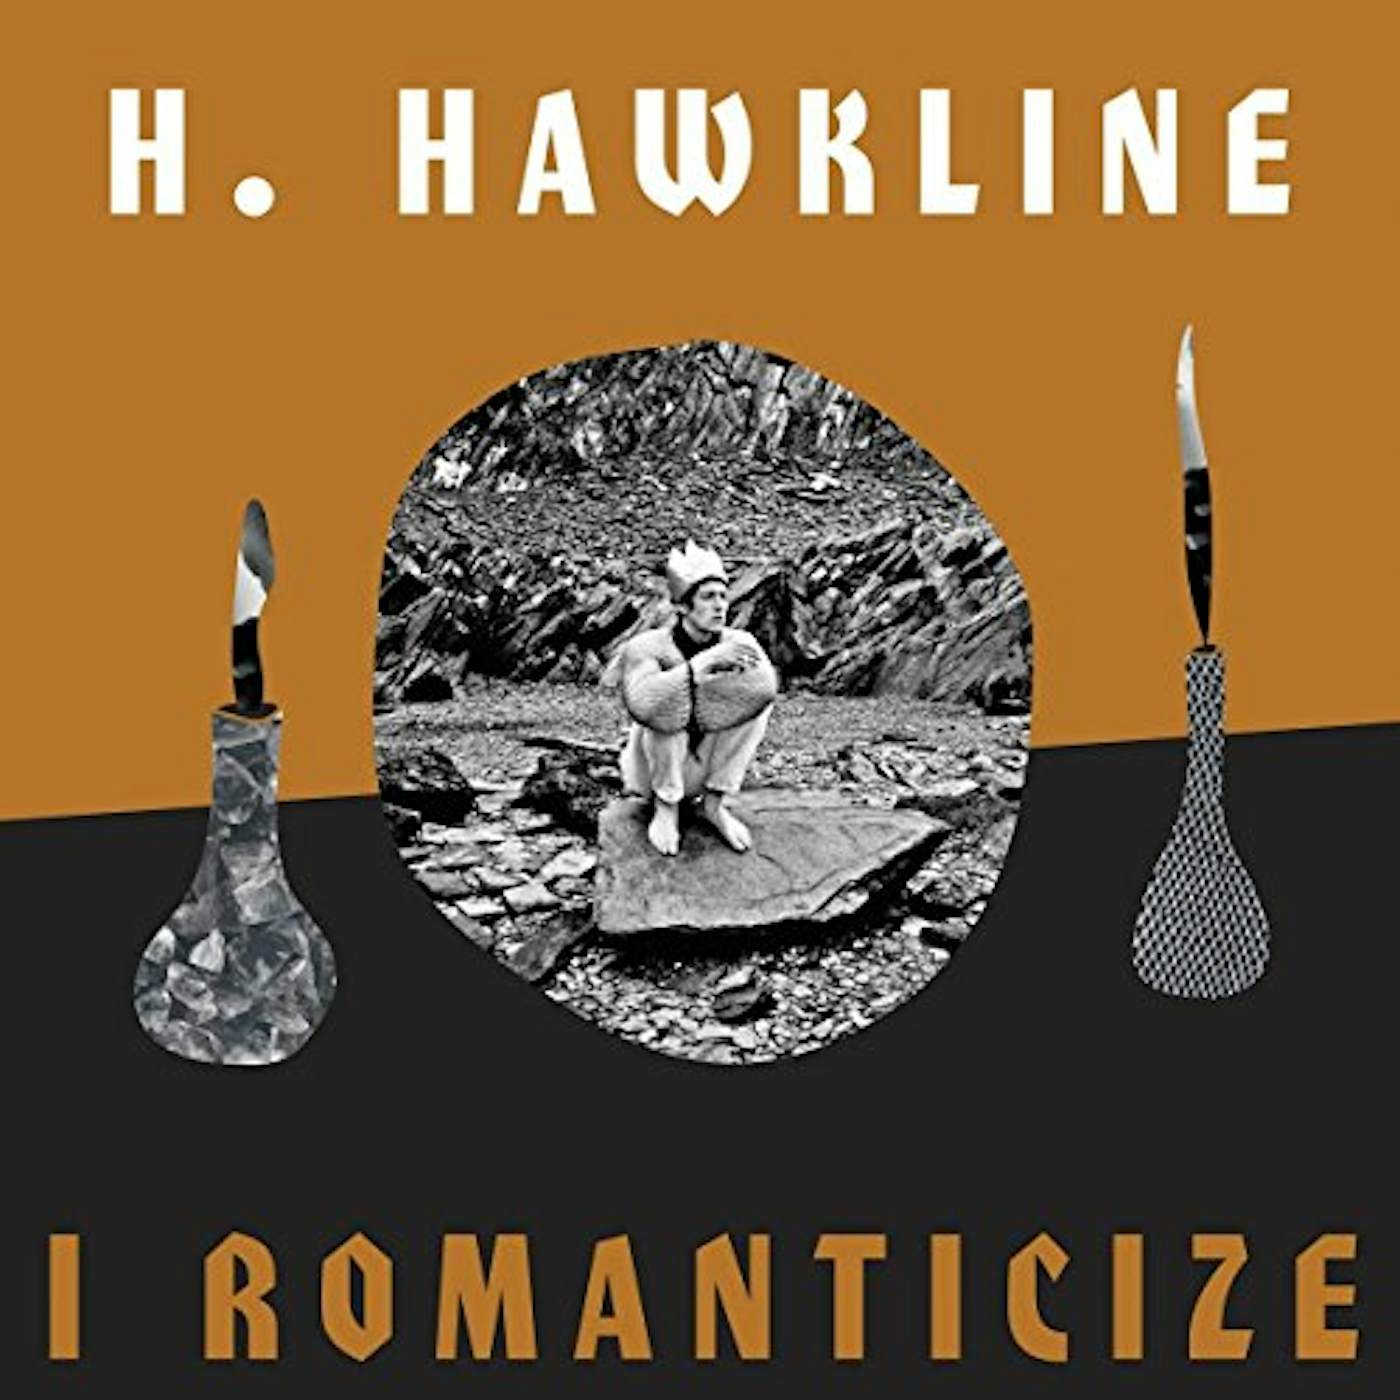 H. Hawkline I ROMANTICIZE CD